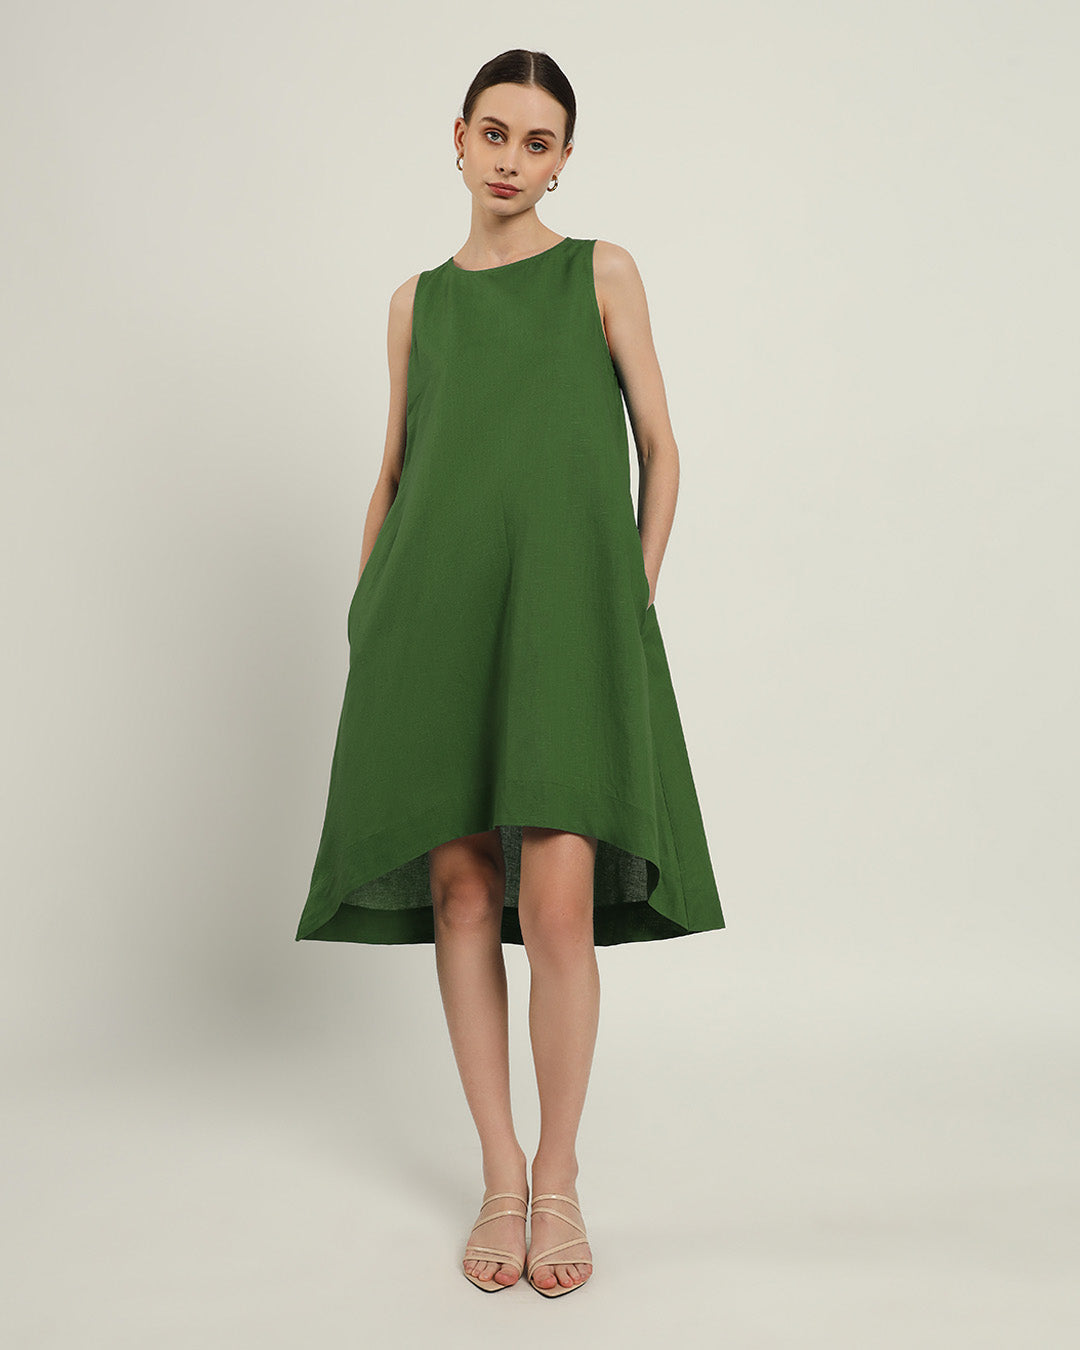 The Odesa Emerald Dress